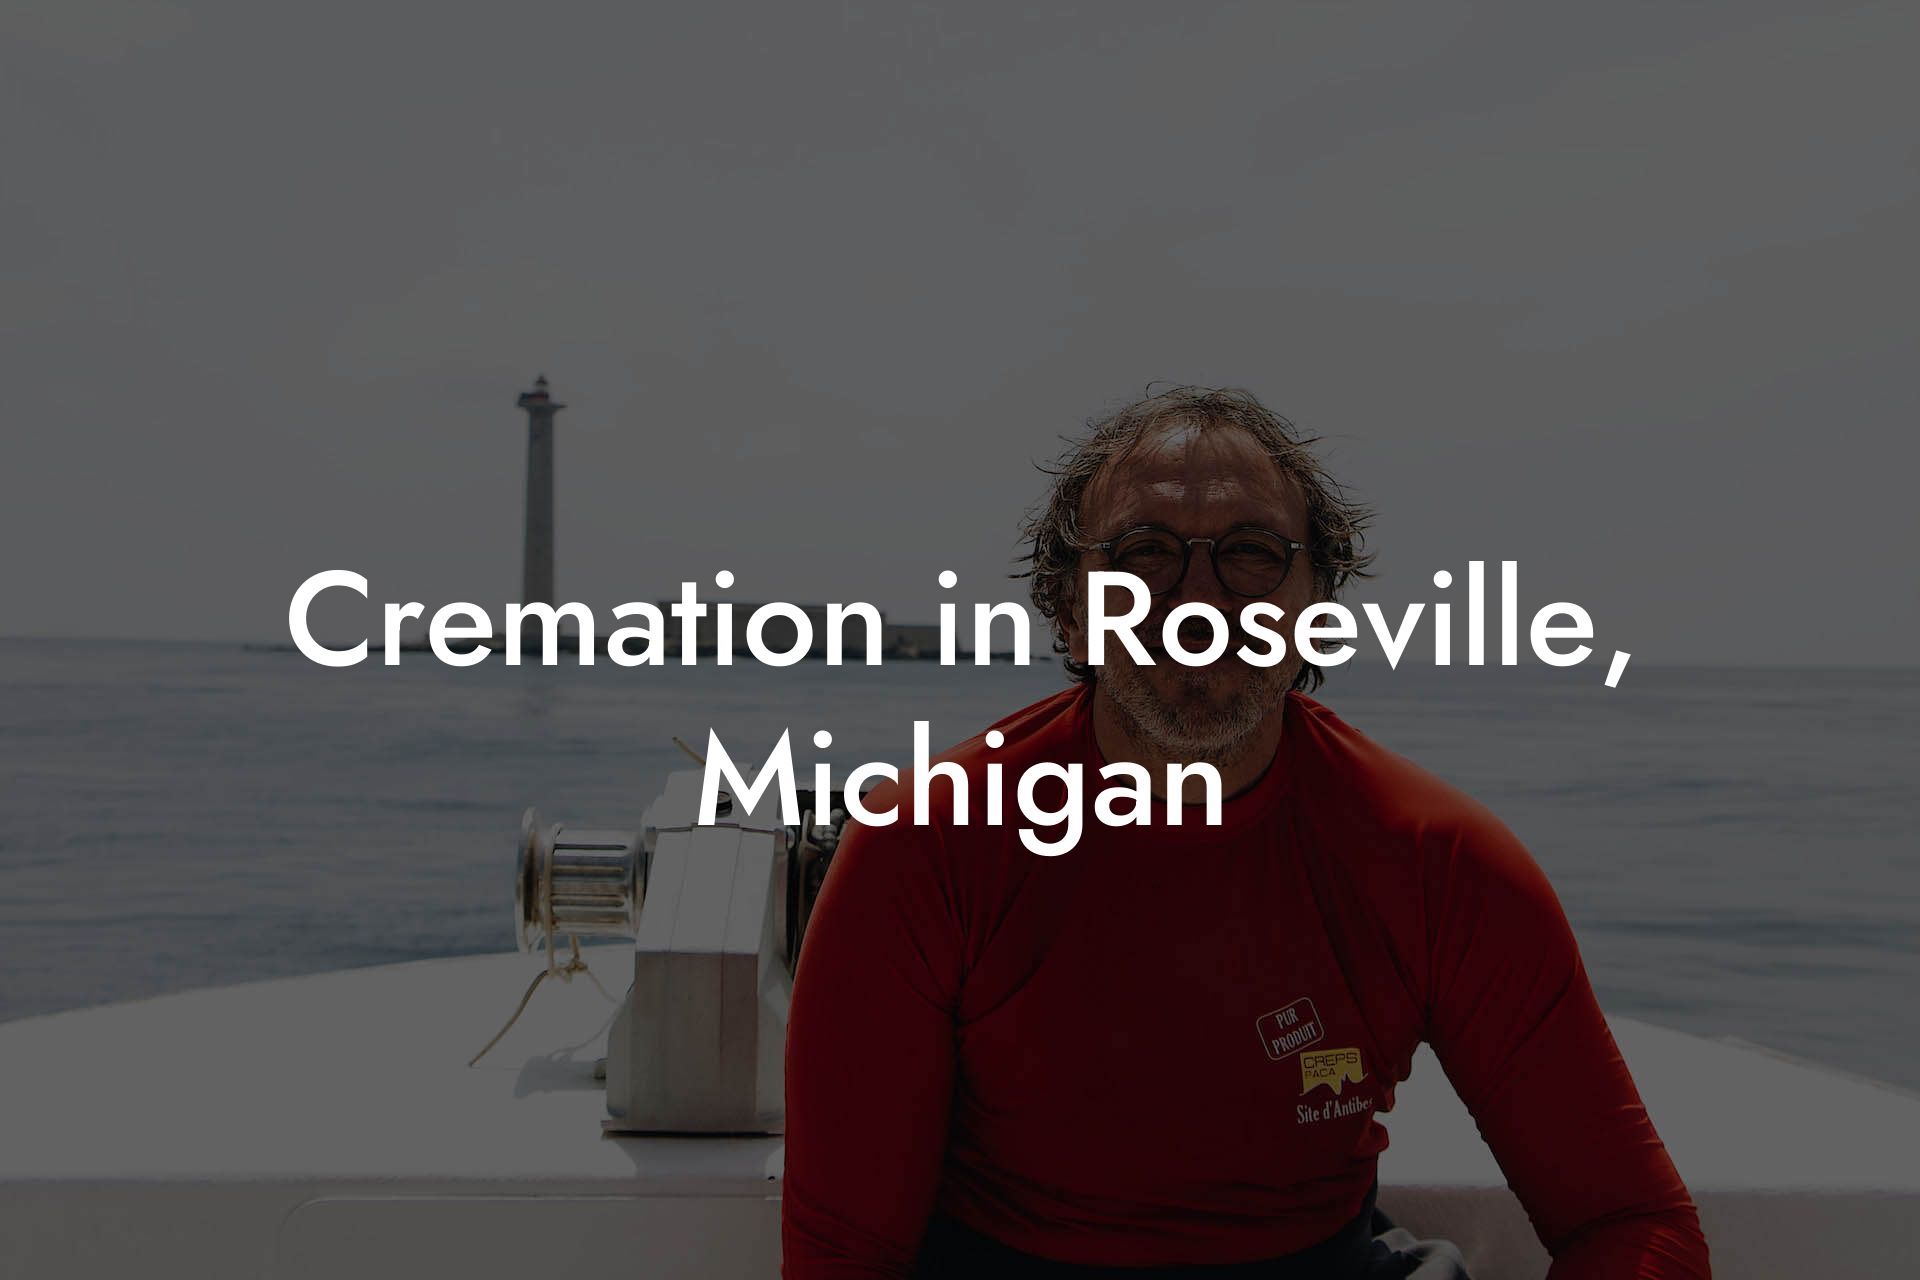 Cremation in Roseville, Michigan